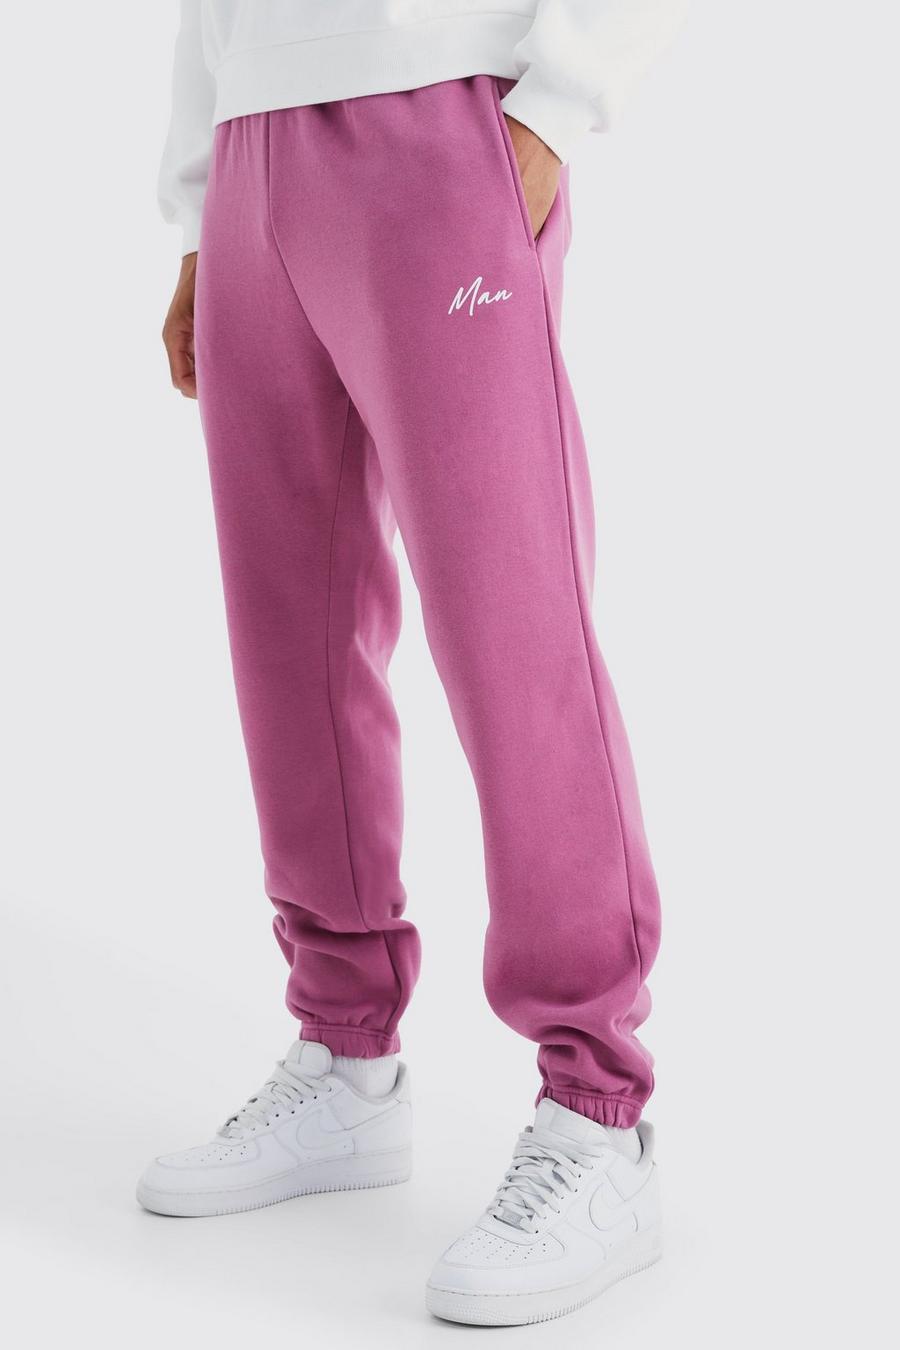 Pantaloni tuta Tall Core Fit con firma Man e logo, Pink